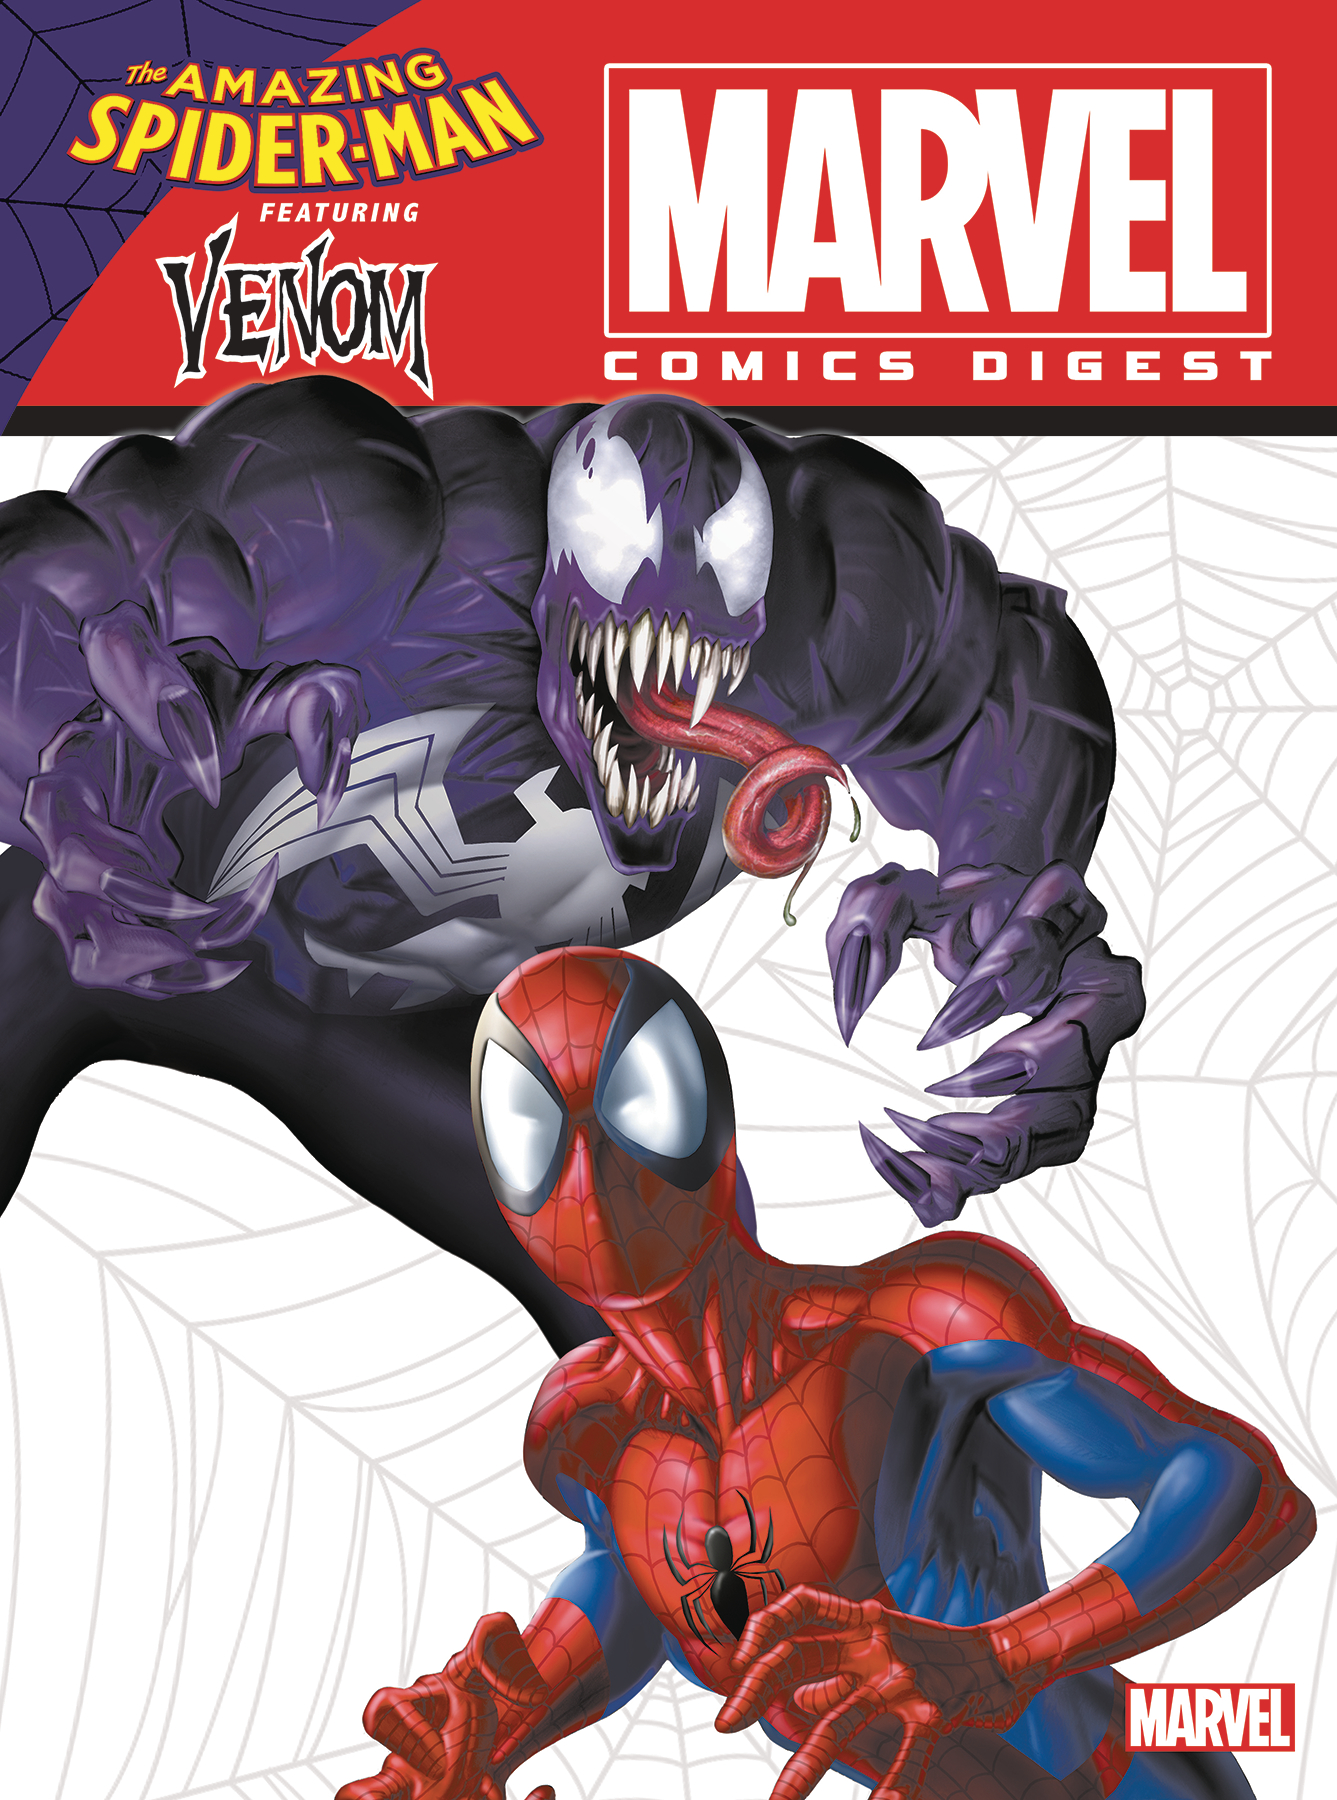 MARVEL COMICS DIGEST #8 SPIDER-MAN & VENOM